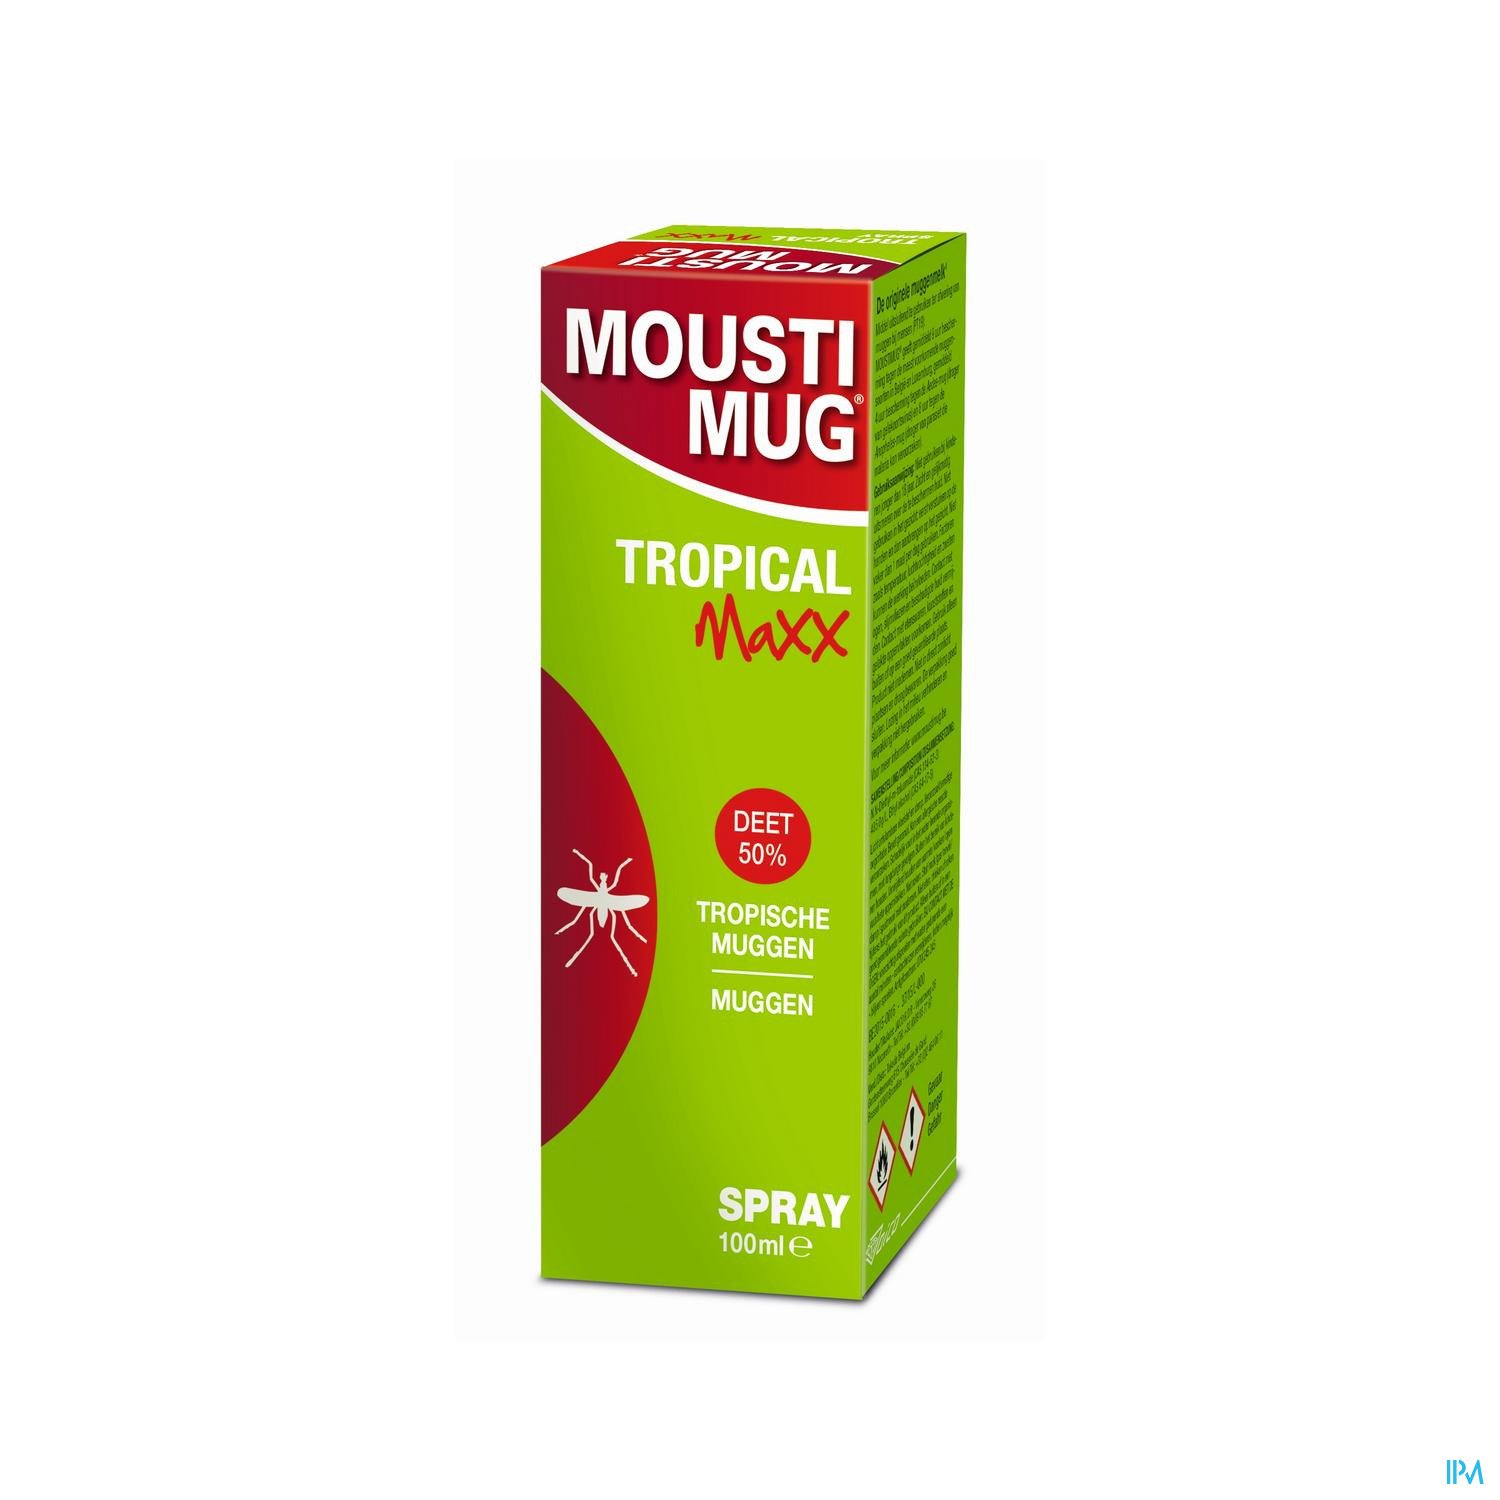 Image of Moustimug Tropical Maxx 50% DEET Spray 100ml 